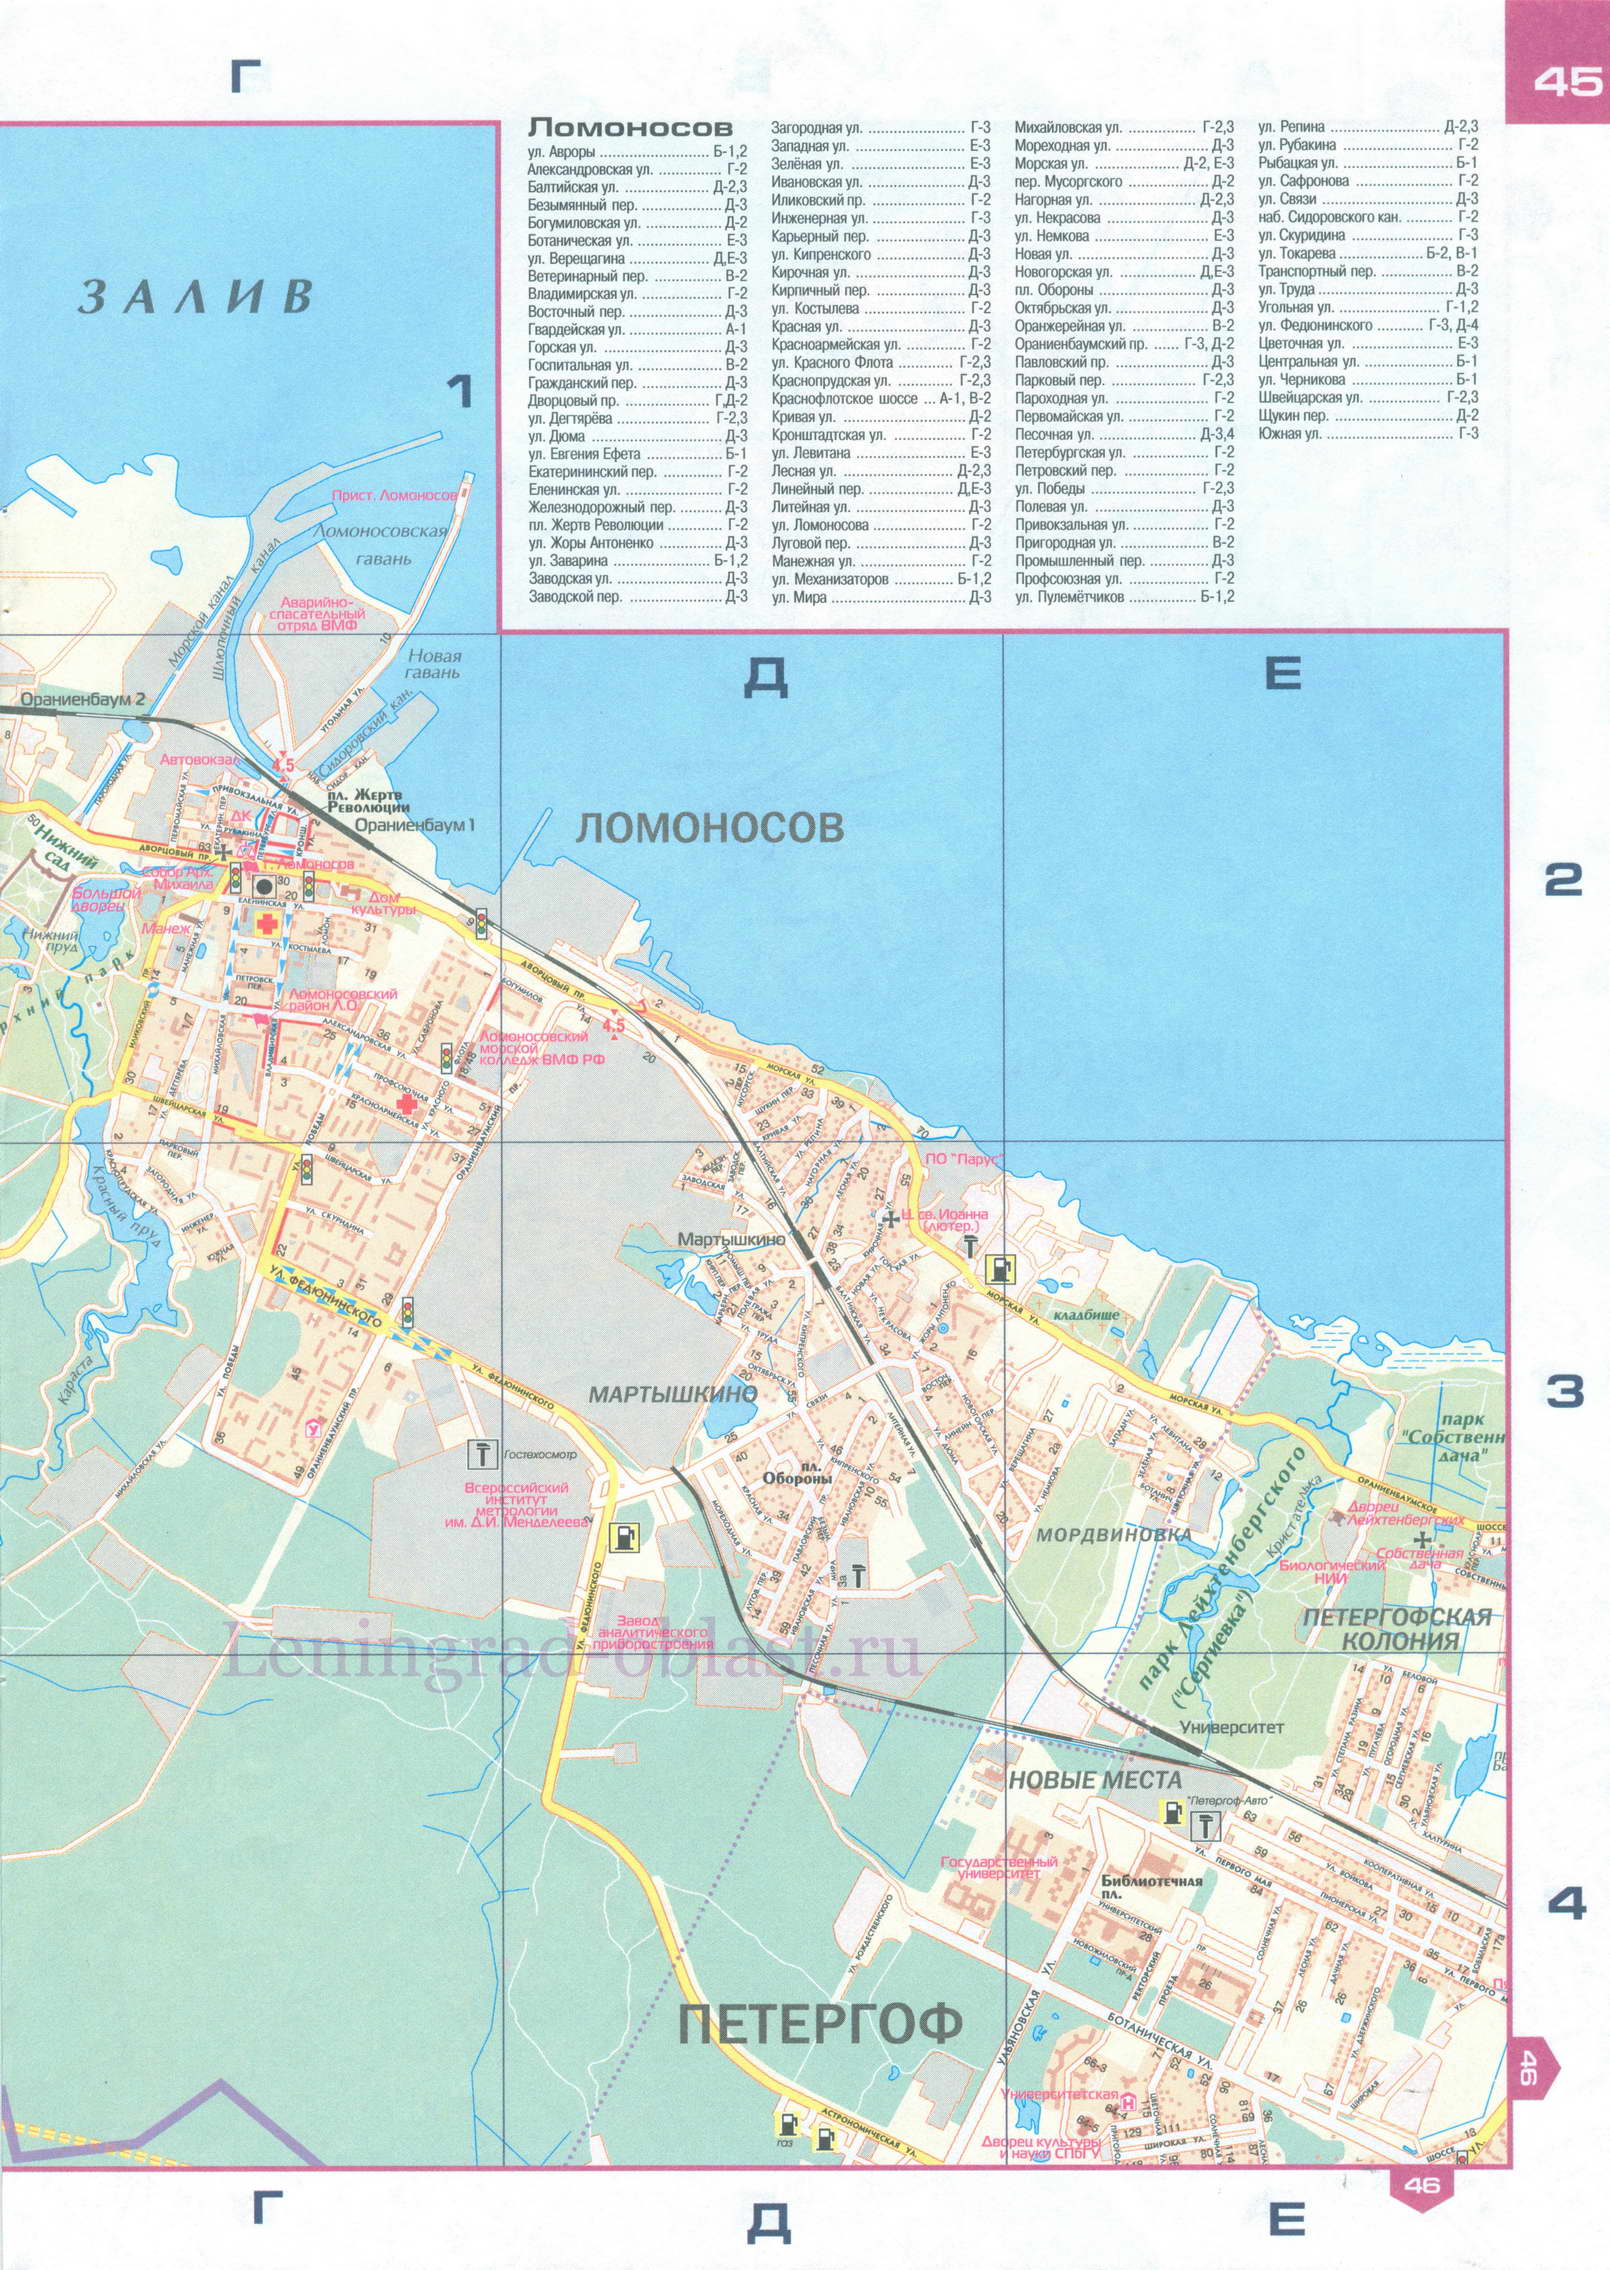 Карта Ломоносова. Подробная карта города Ломоносов, B0 - 